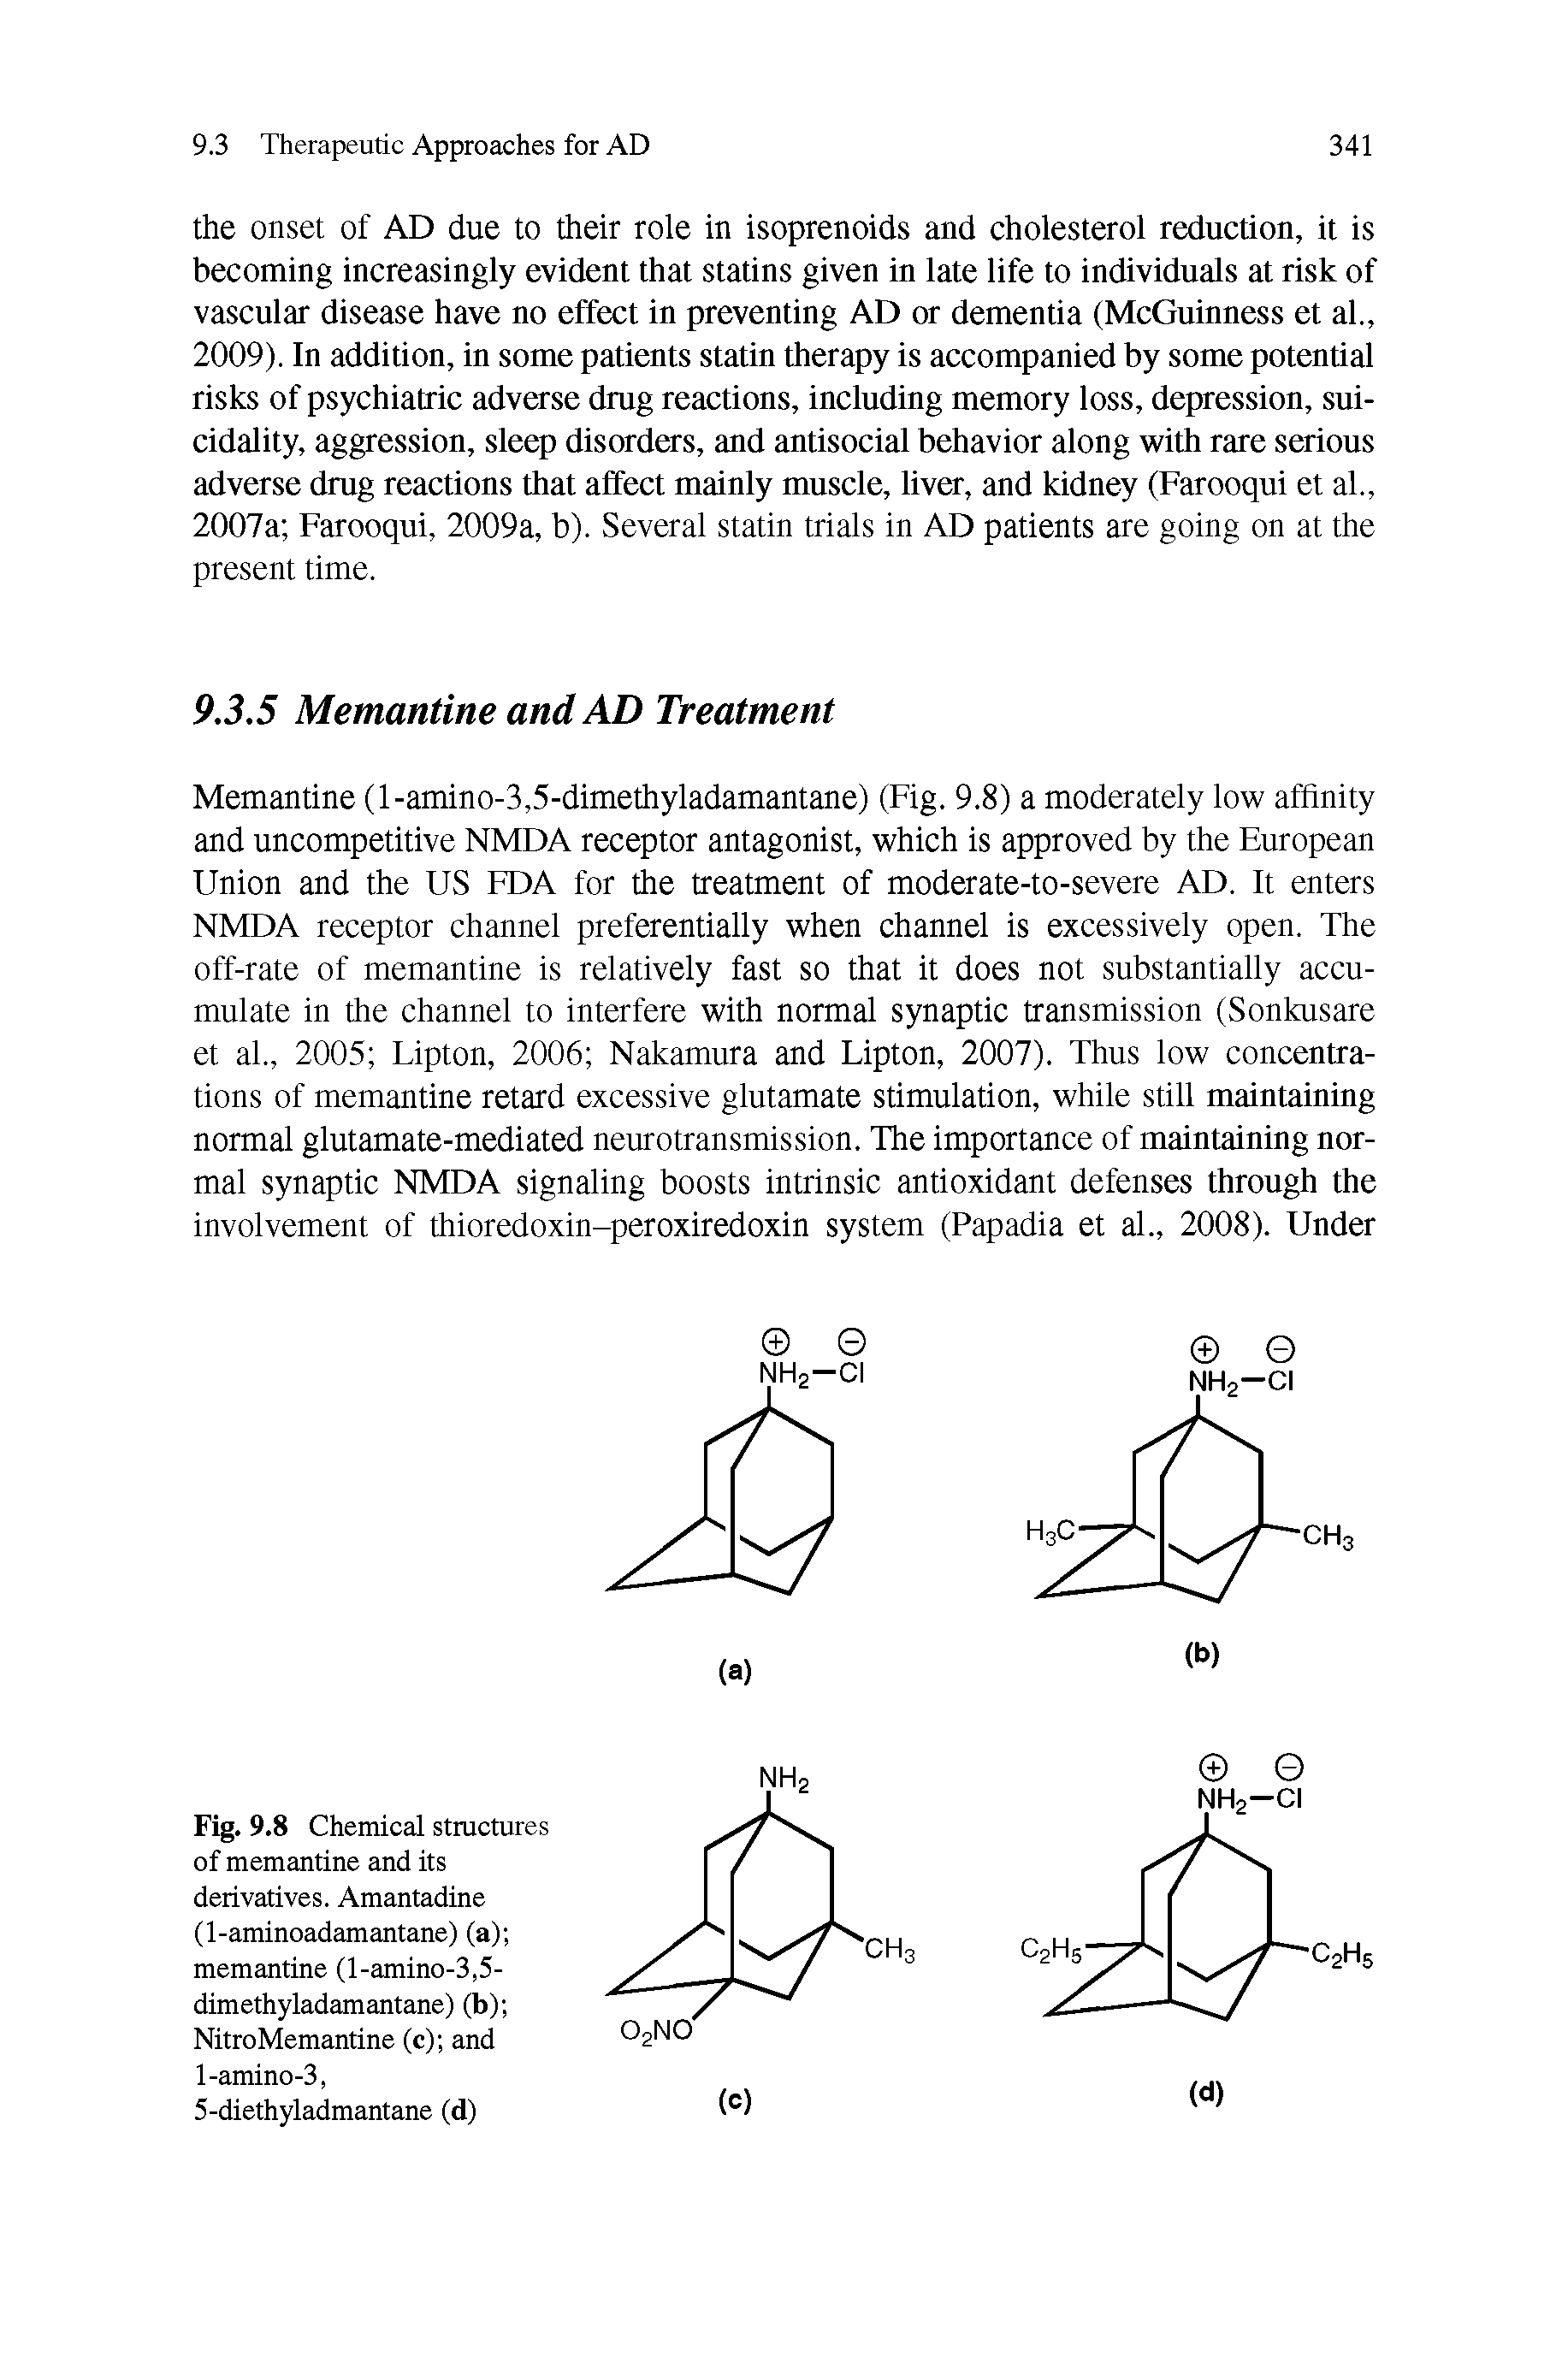 Fig. 9.8 Chemical structures of memantine and its derivatives. Amantadine (1-aminoadamantane) (a) memantine (l-amino-3,5-dimethyladamantane) (b) NitroMemantine (c) and 1-amino-3,...